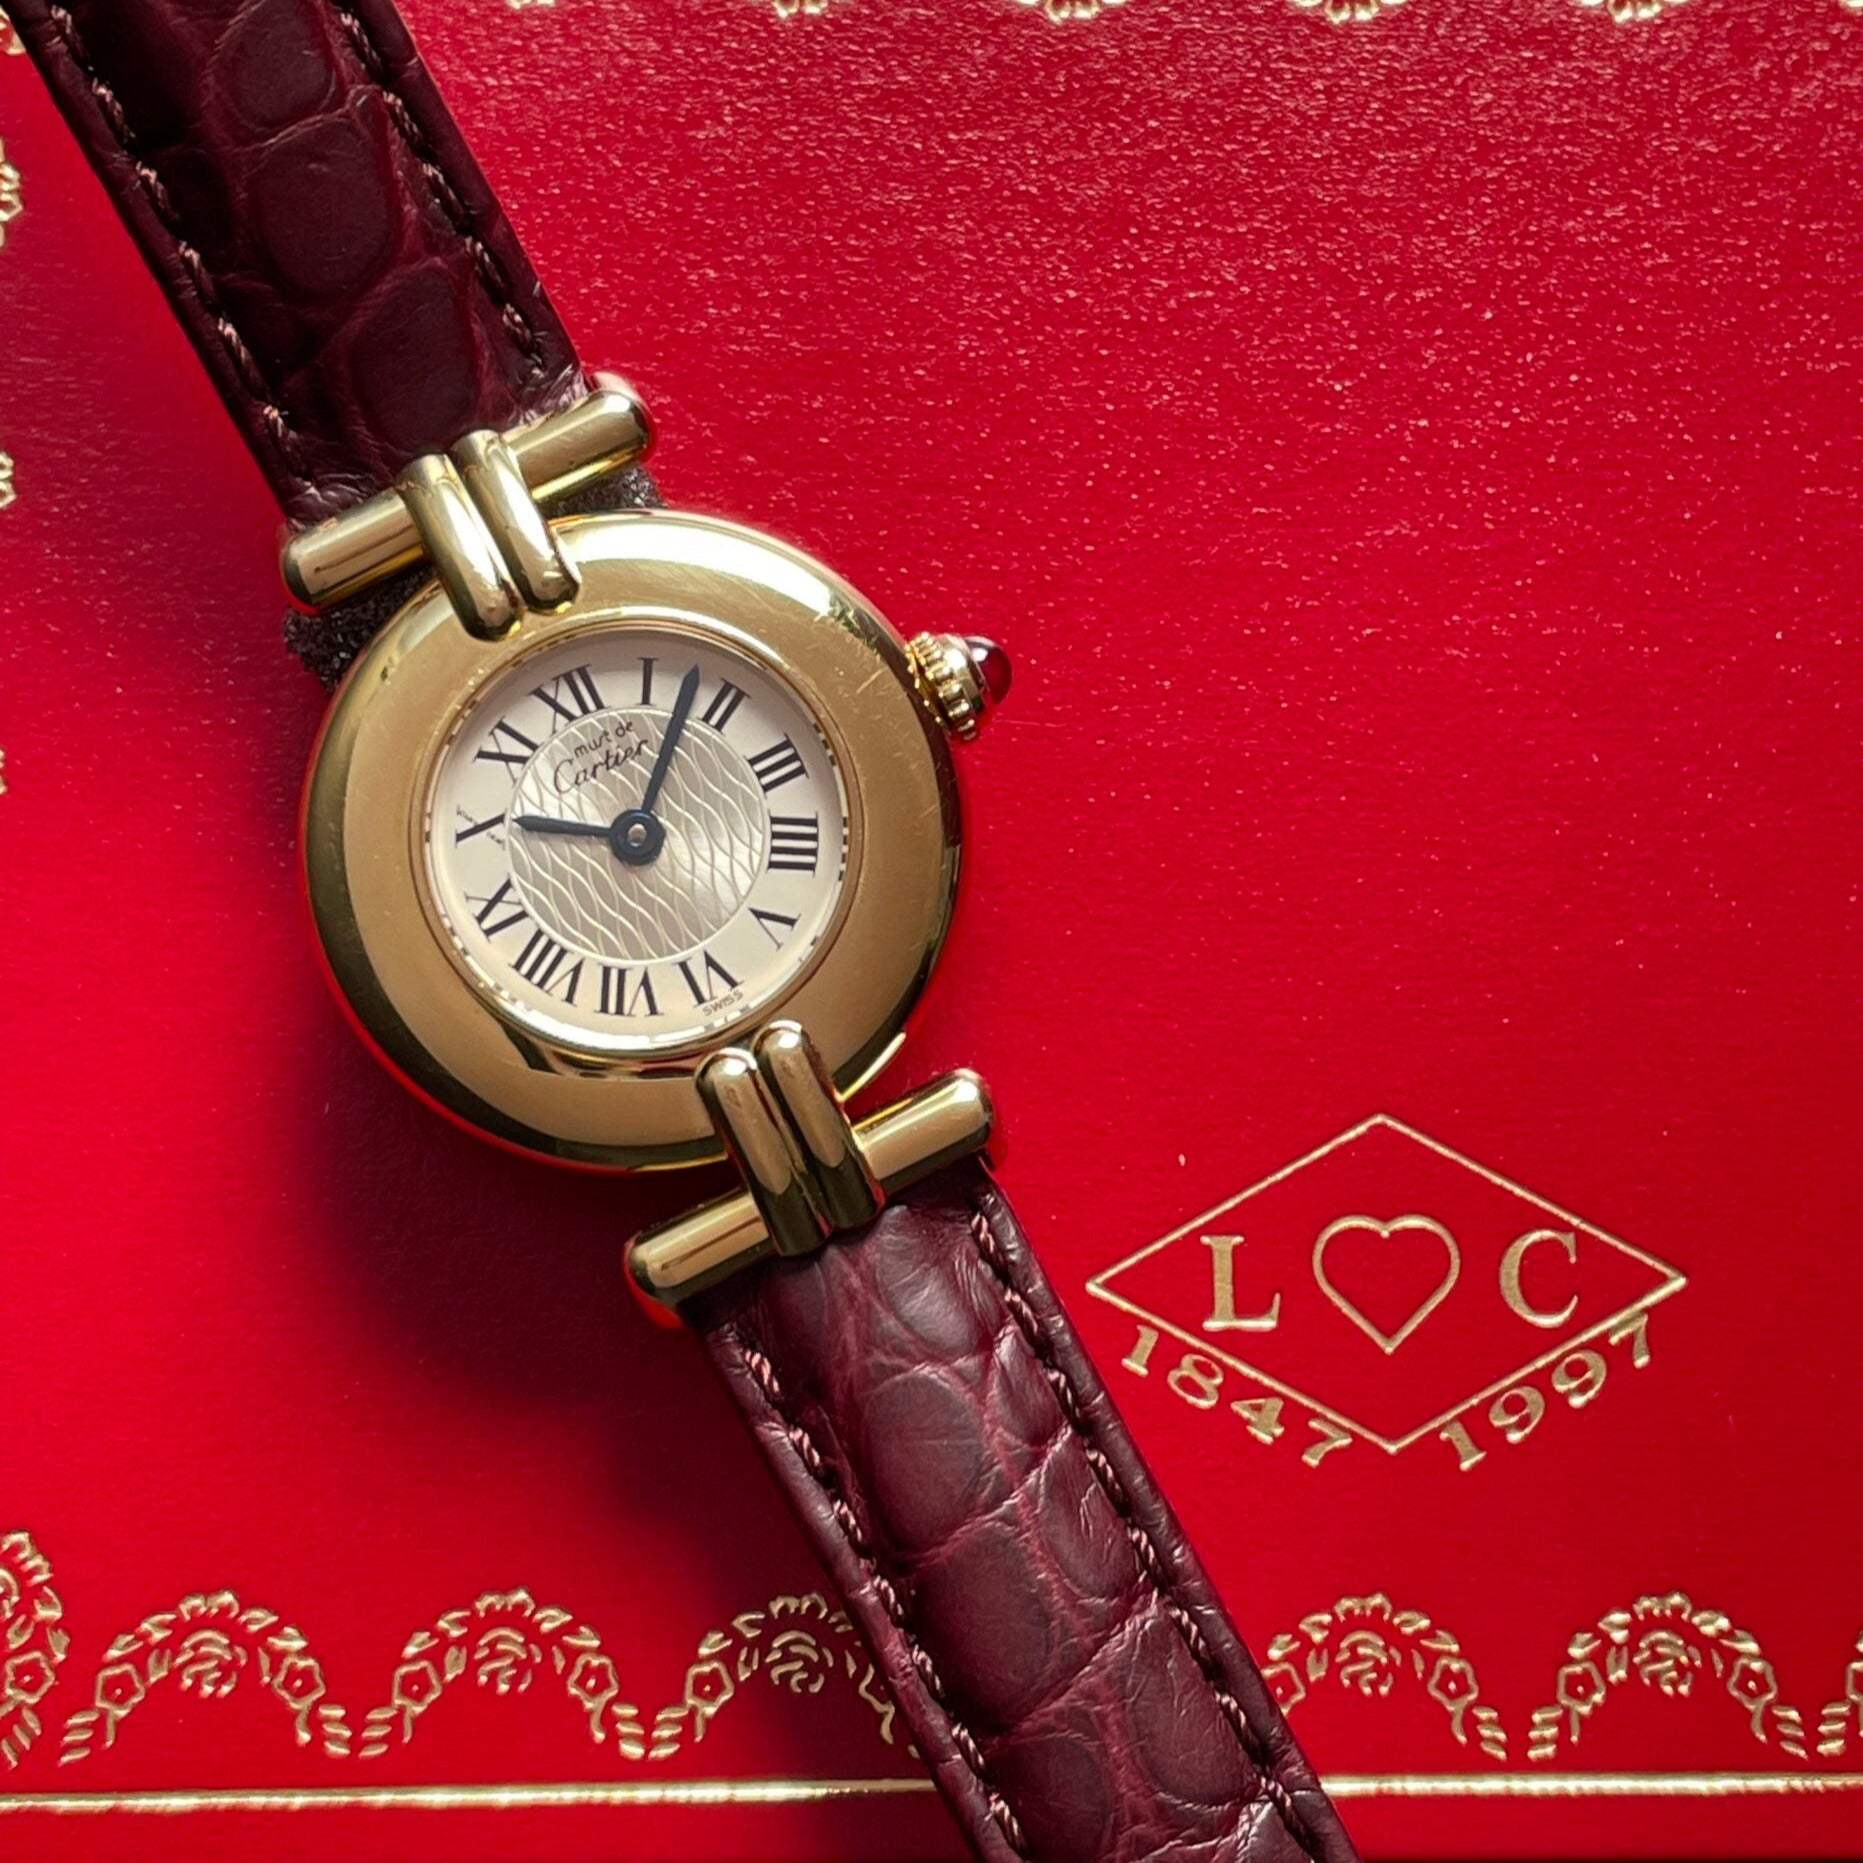 [CARTIER] Masas Collize GP Cartier 150th Anniversary 1847 Limited Model